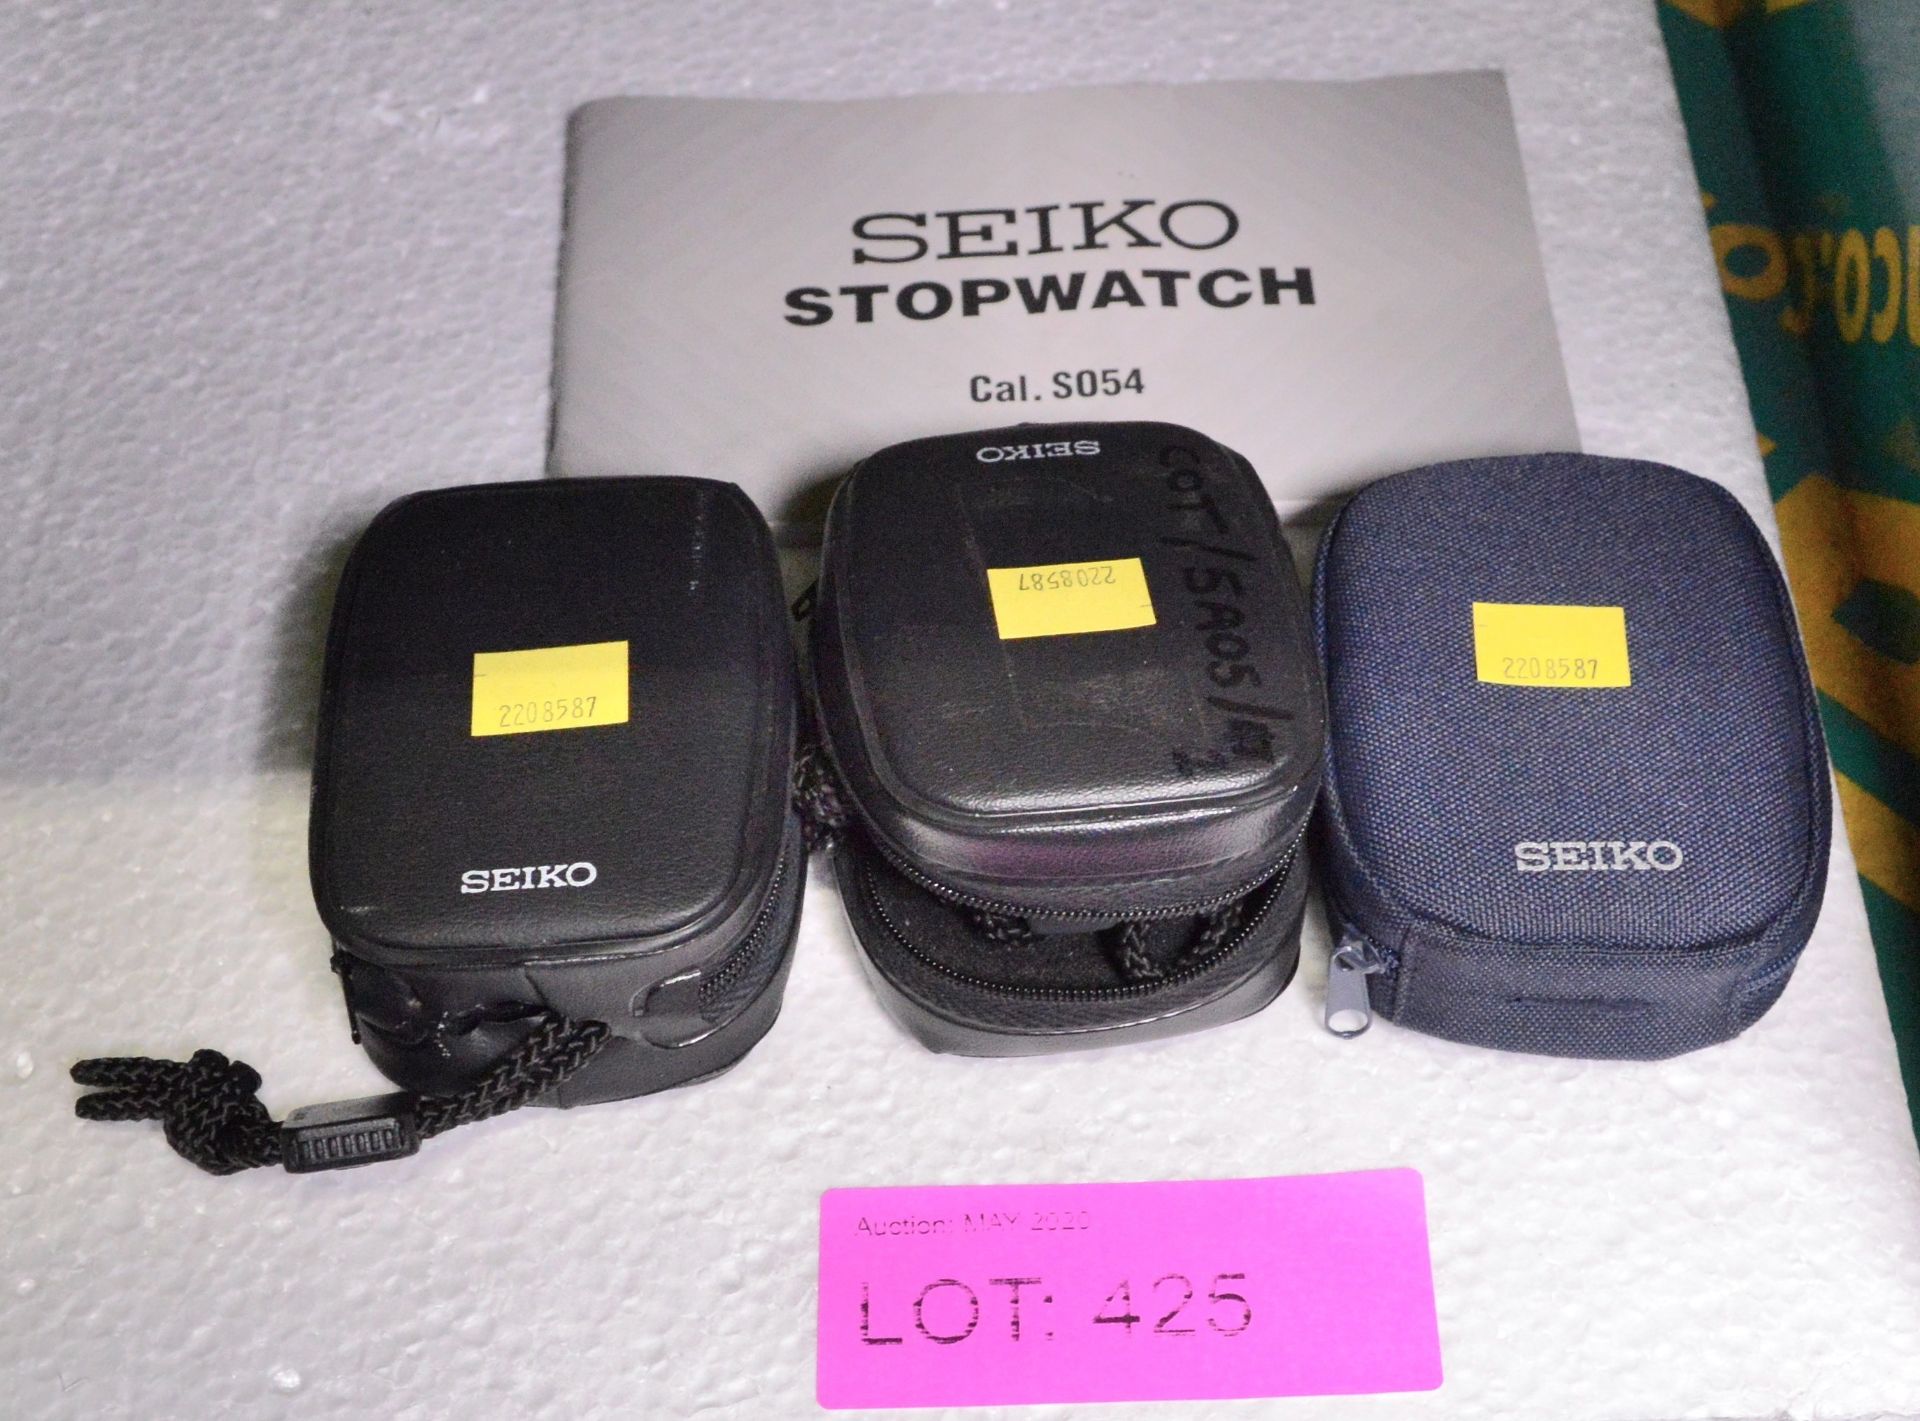 3x Seiko Digital Stopwatches with Case.